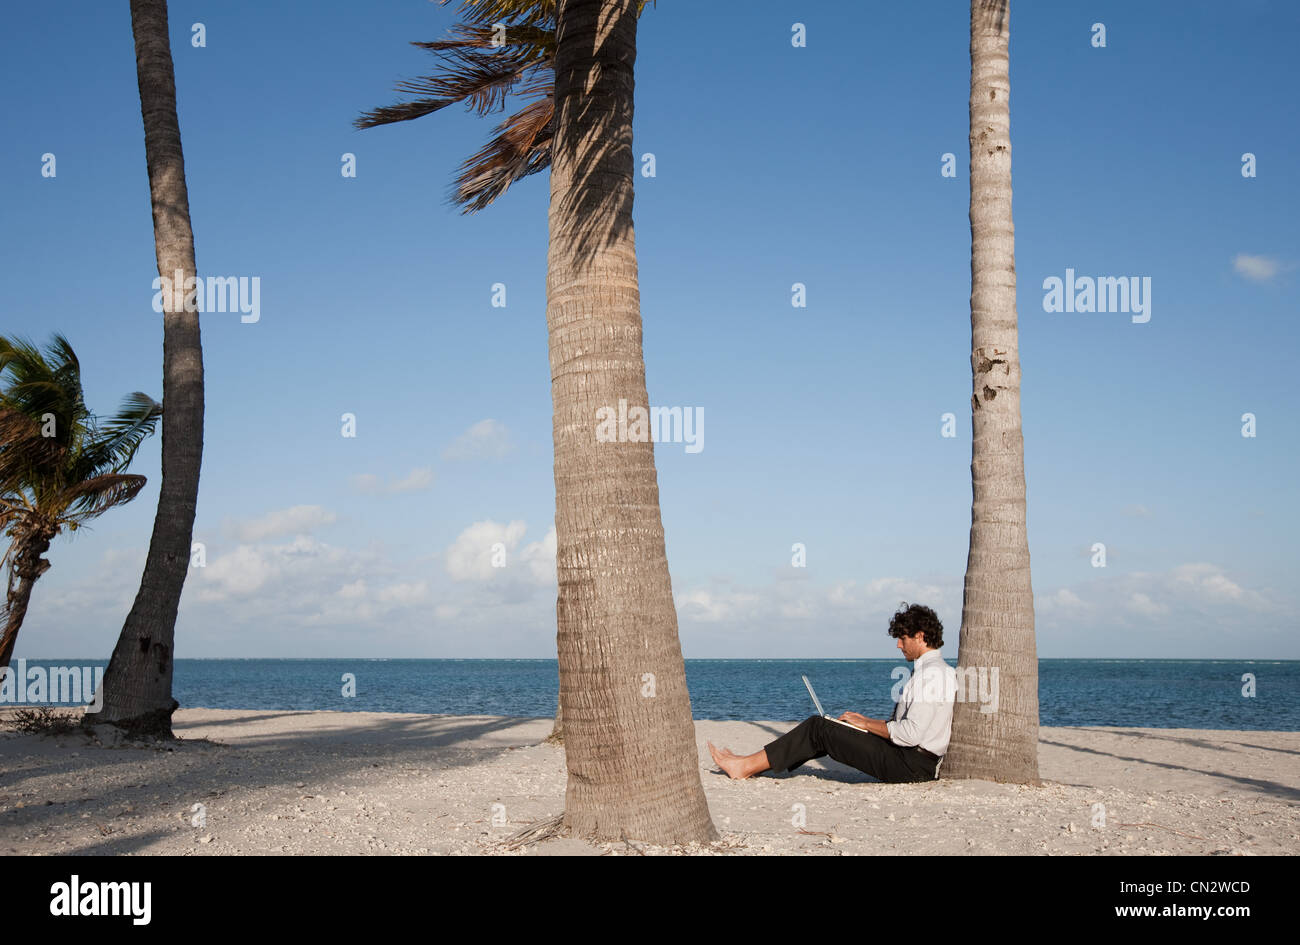 Businessman sitting by palm tree on beach using laptop Stock Photo